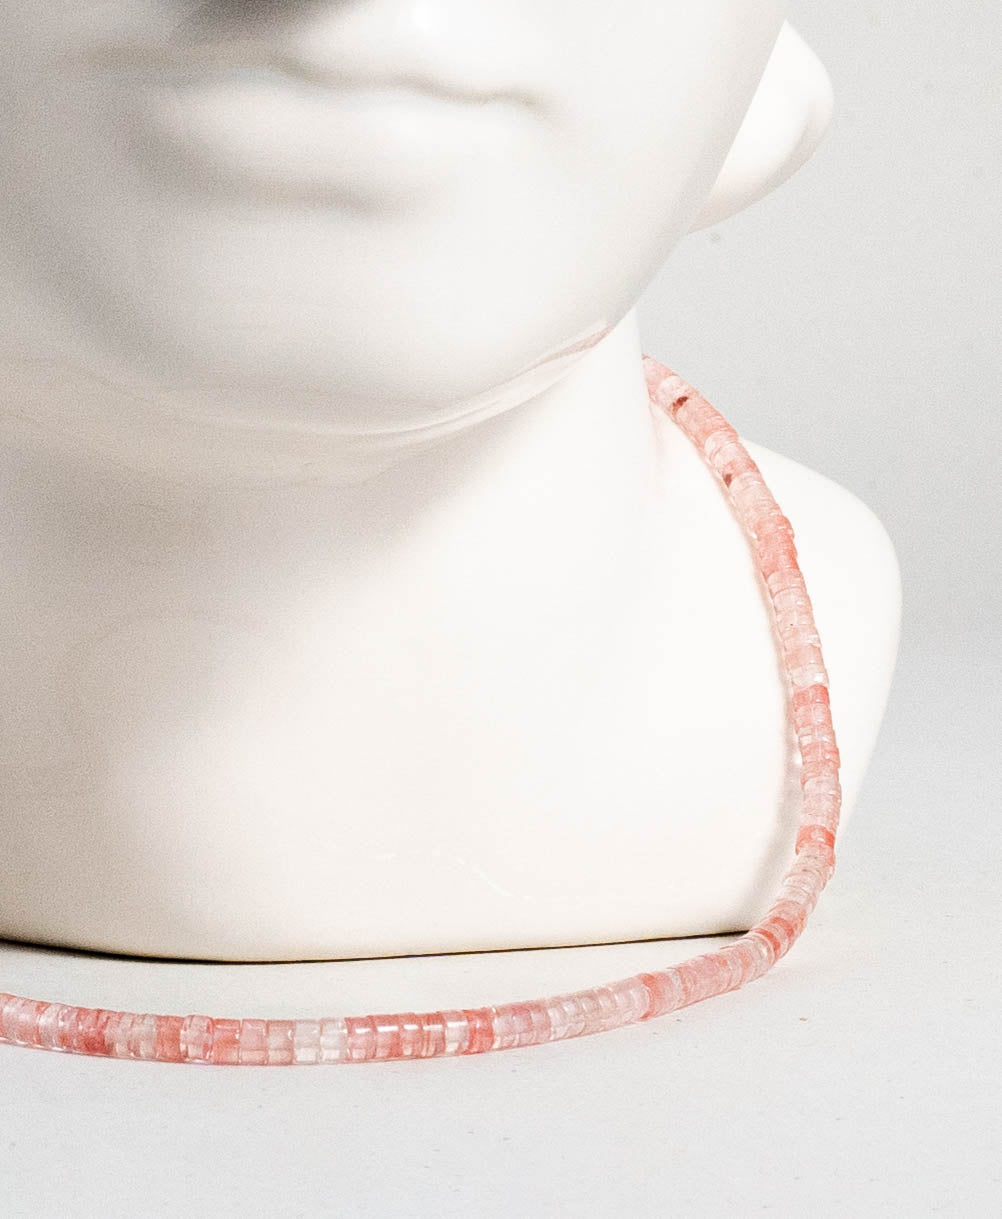 Corcuera Necklace - Pink Agatha